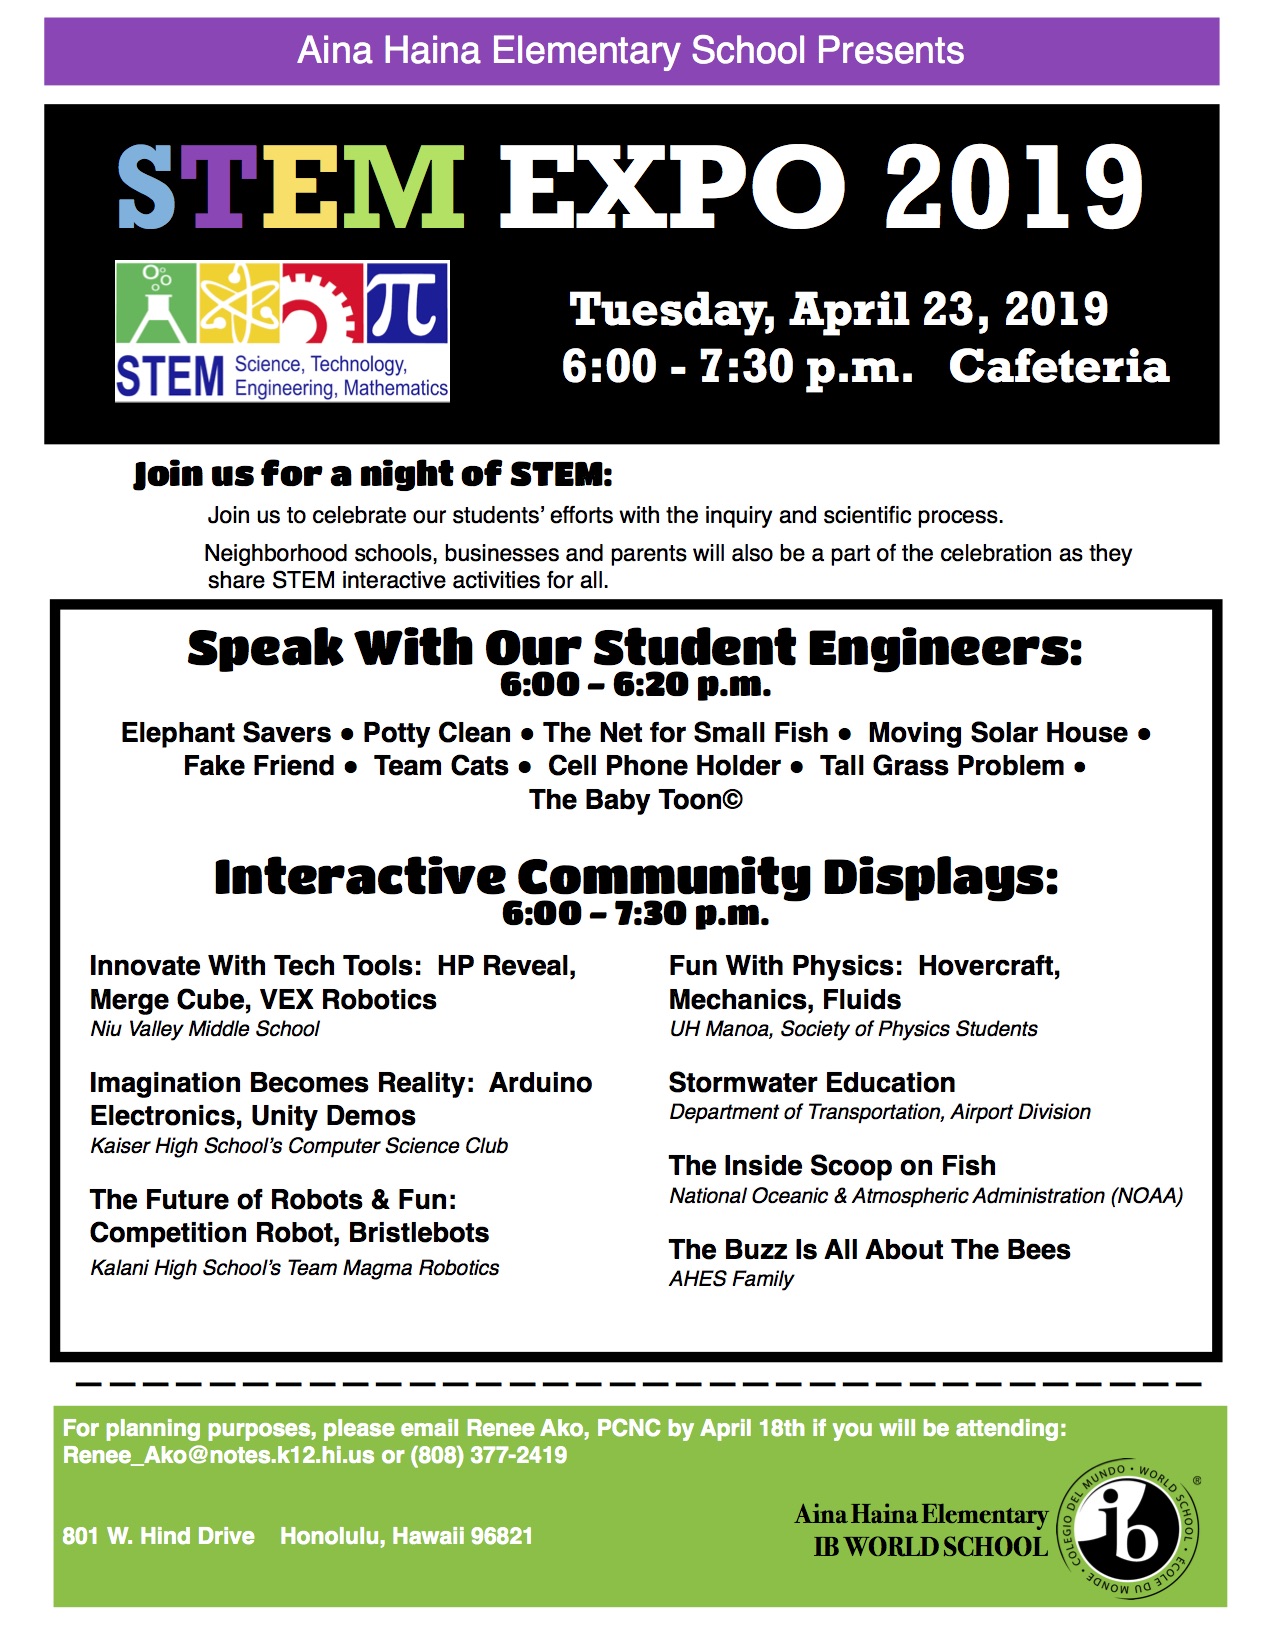 STEM Expo 2019 Flyer